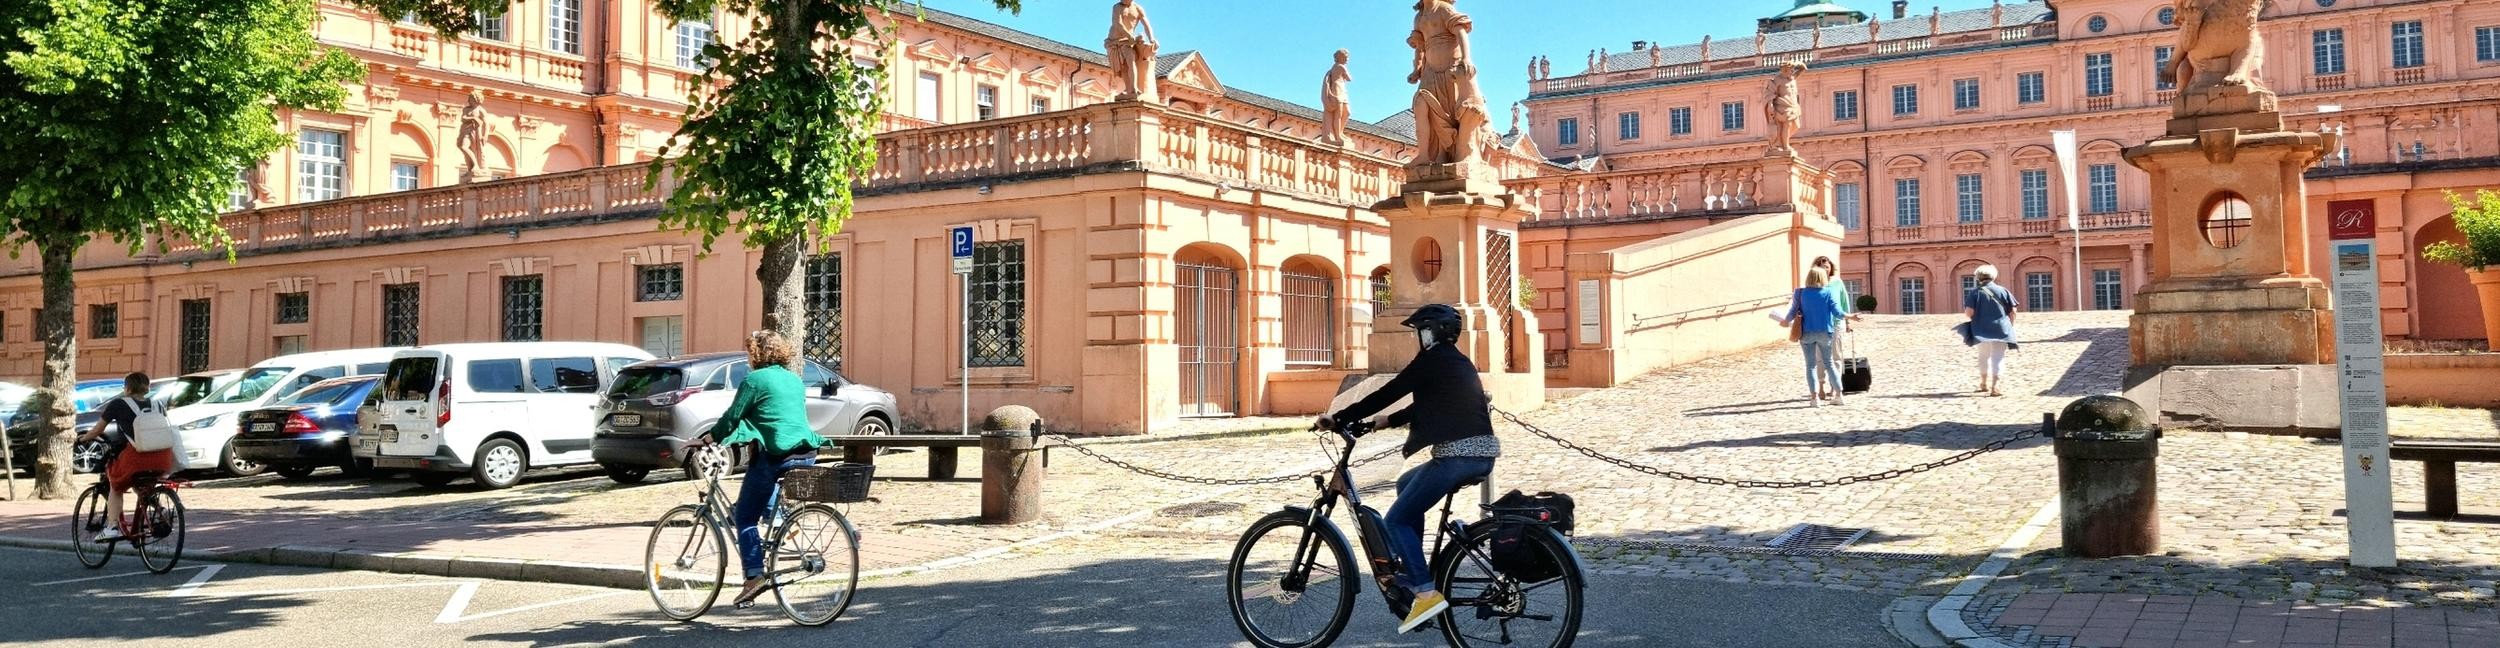 Fahrradfahrer vor dem Schloss Rastatt in der Herrenstraße